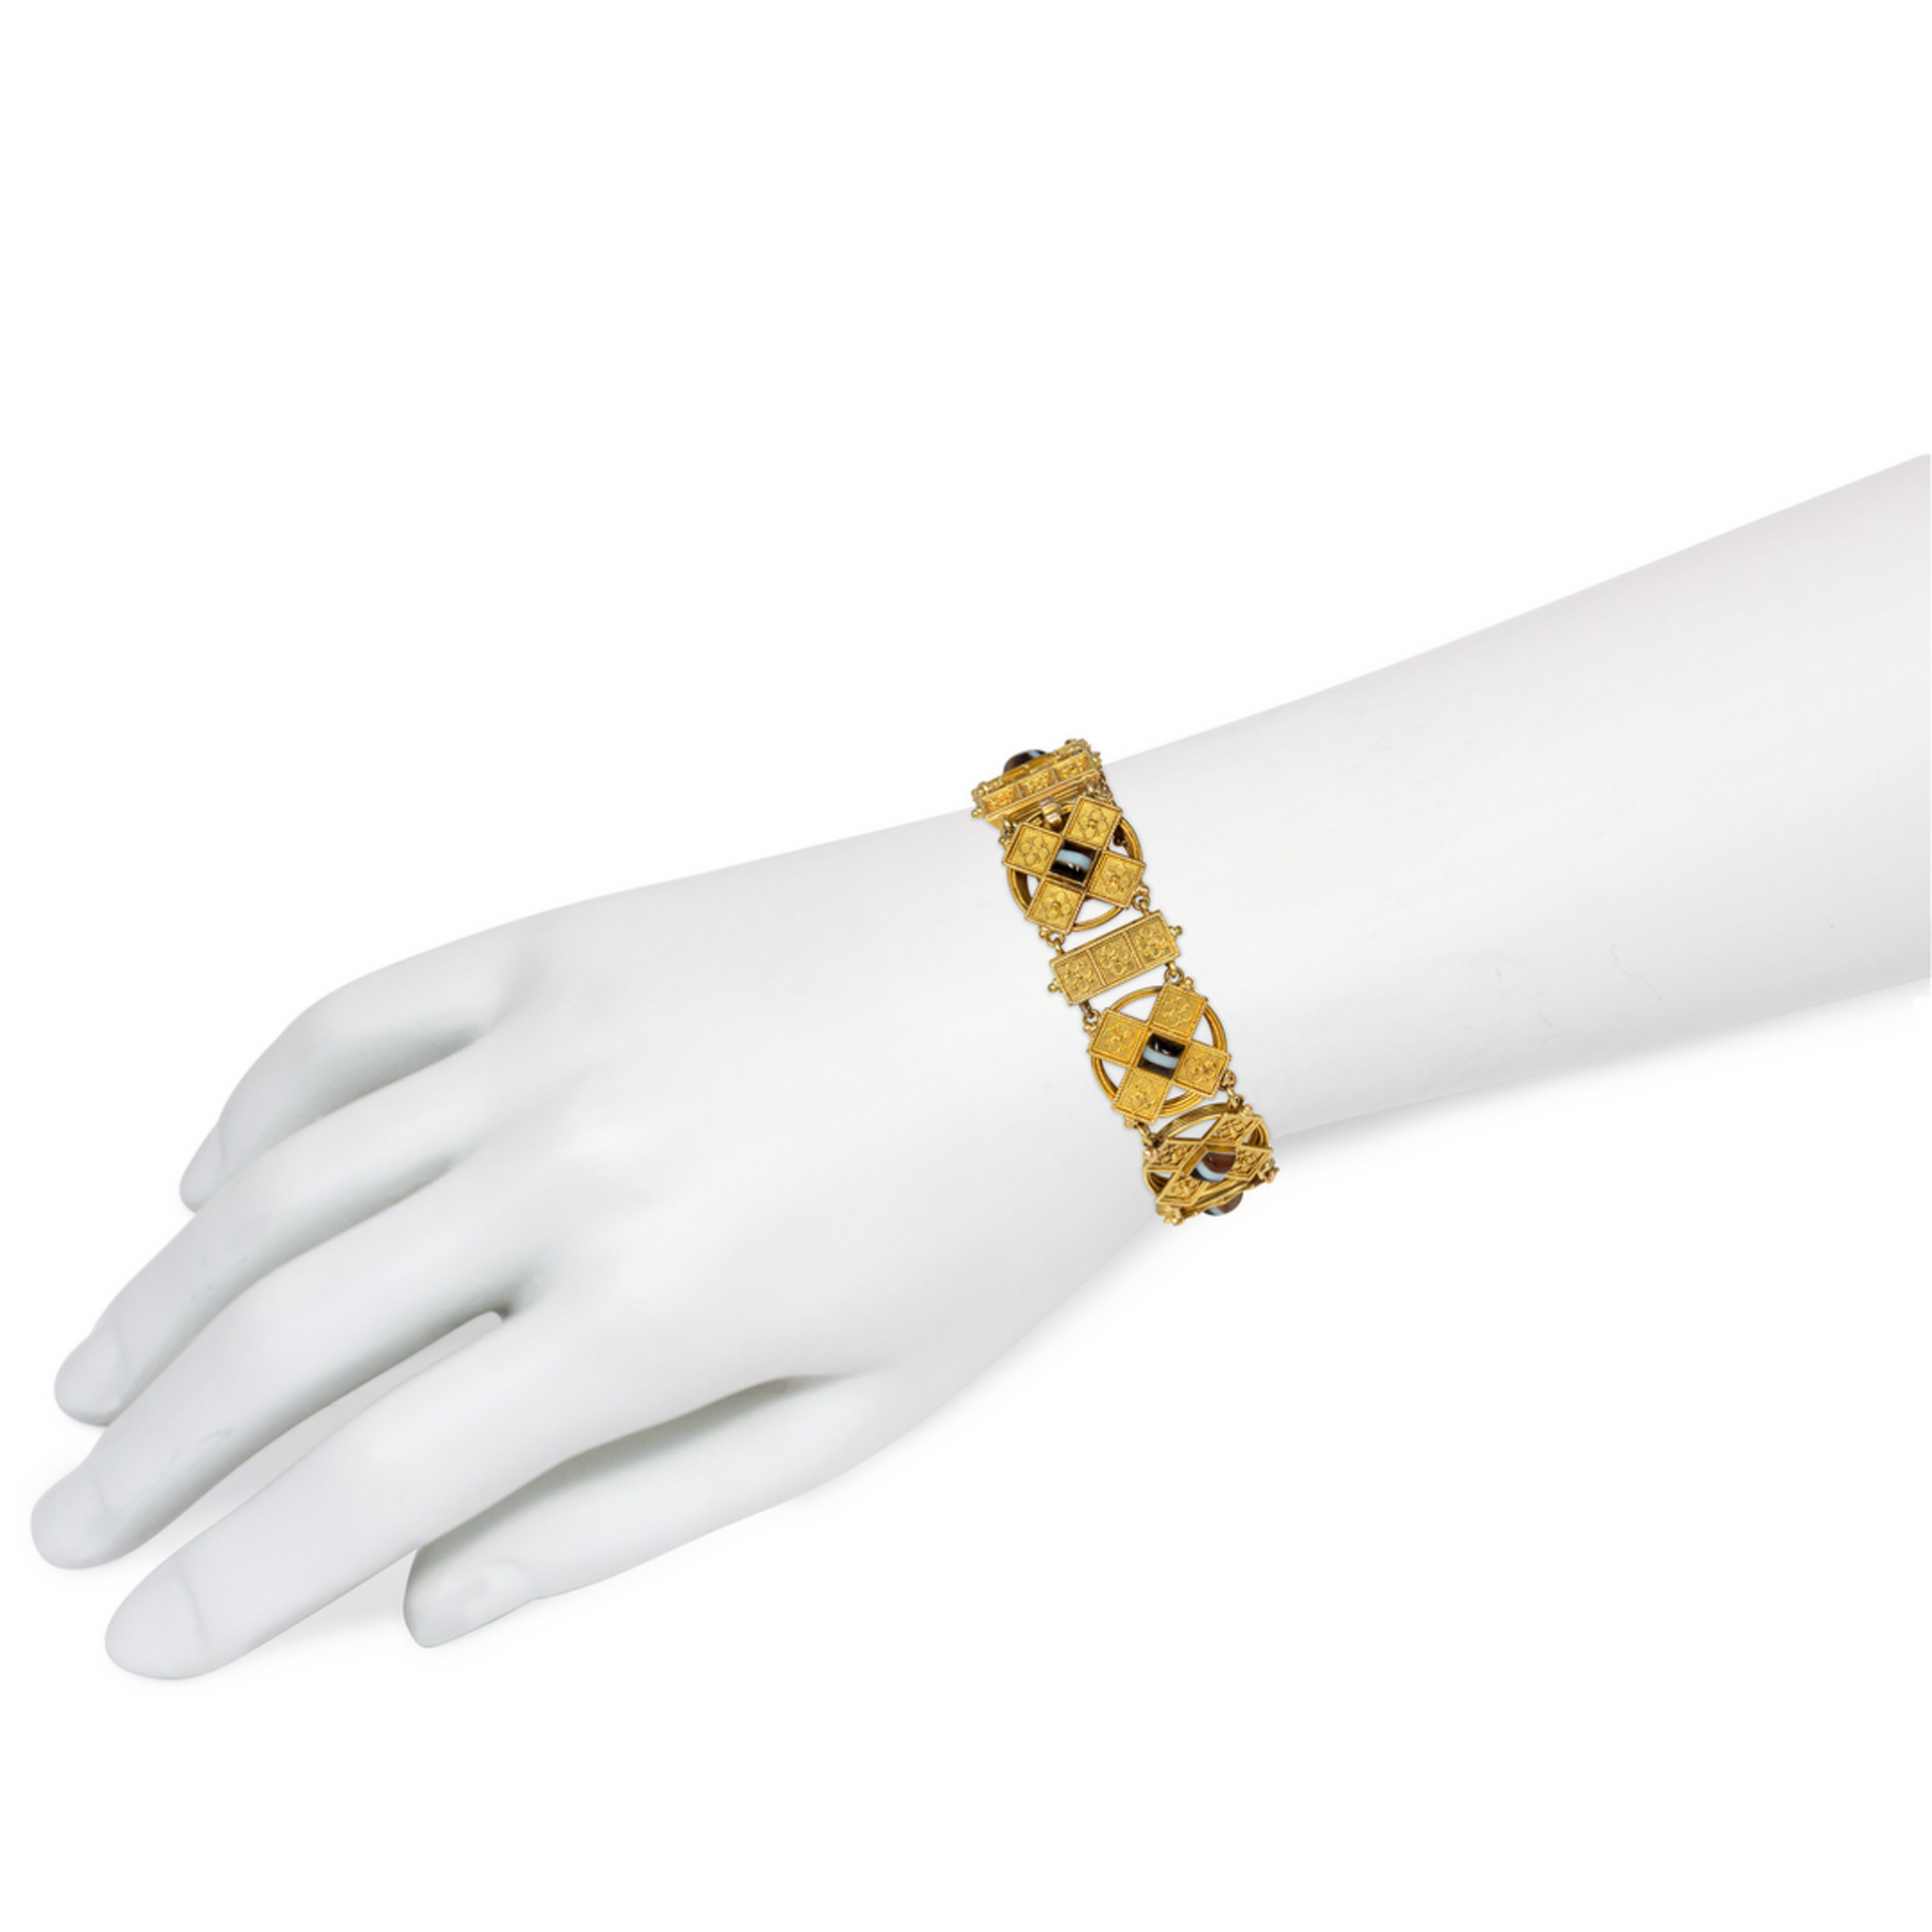 Victorian 18KT Yellow Gold Agate Bracelet on wrist